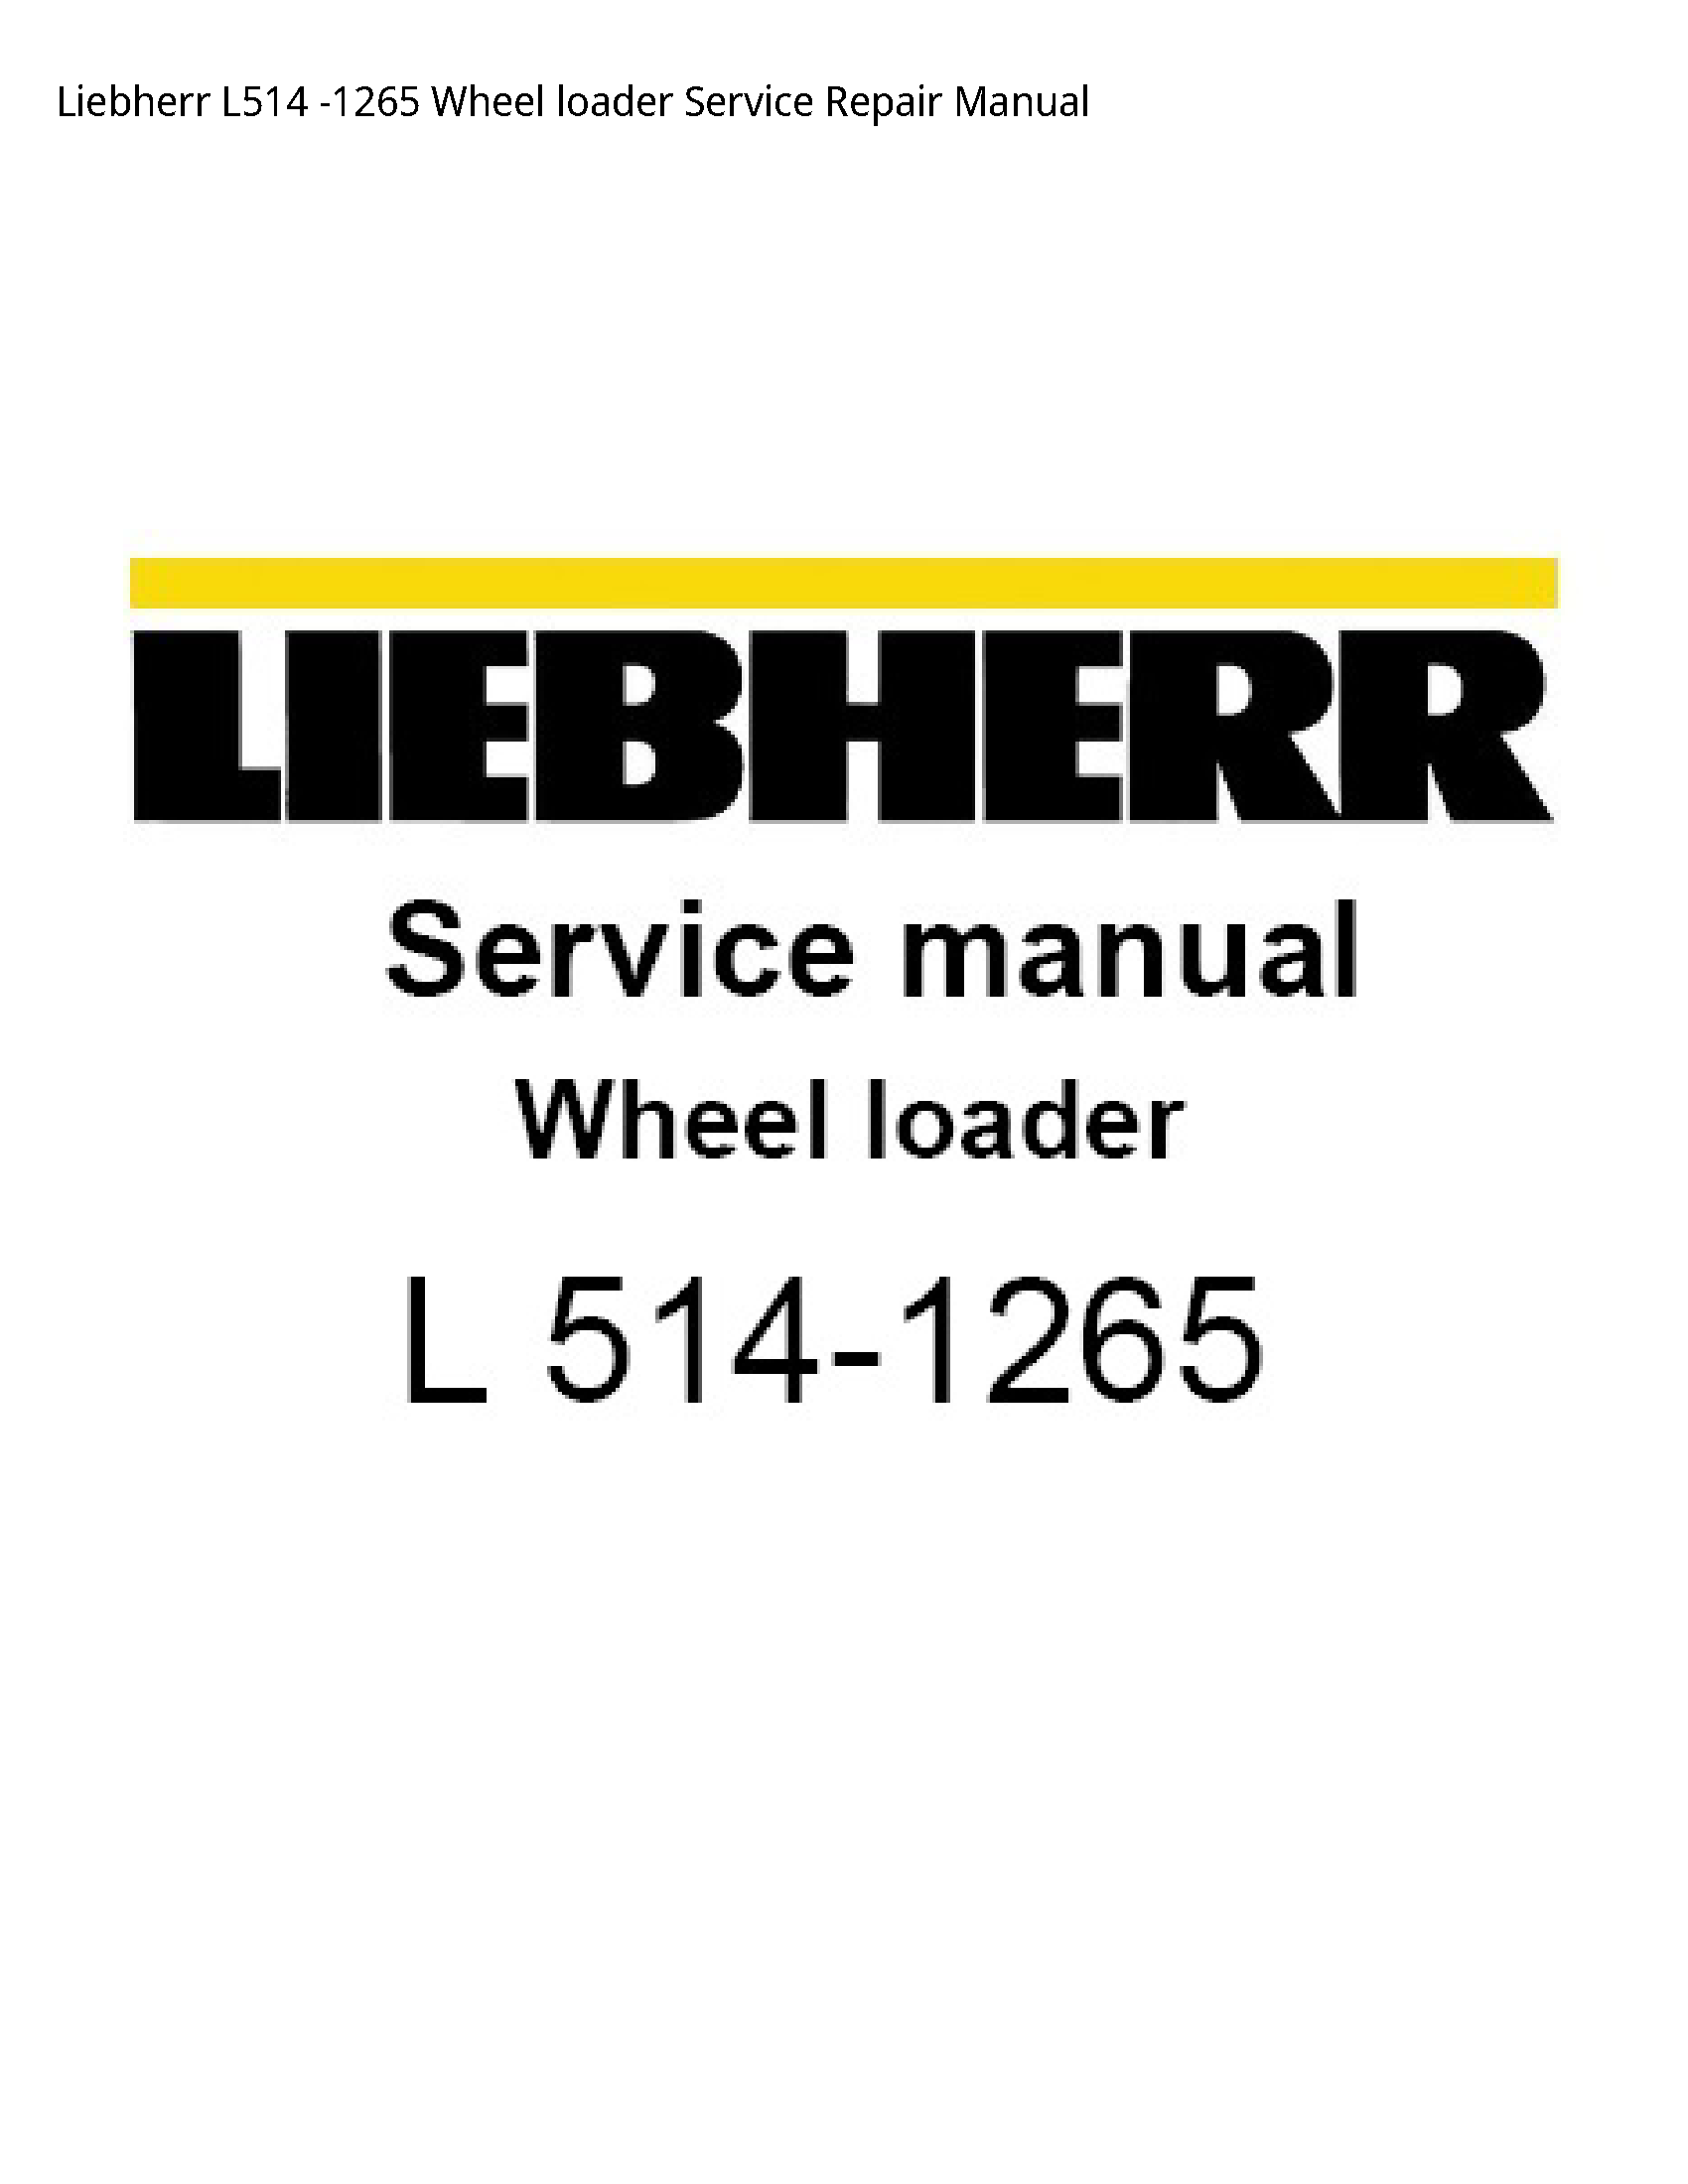 Liebherr L514 Wheel loader manual